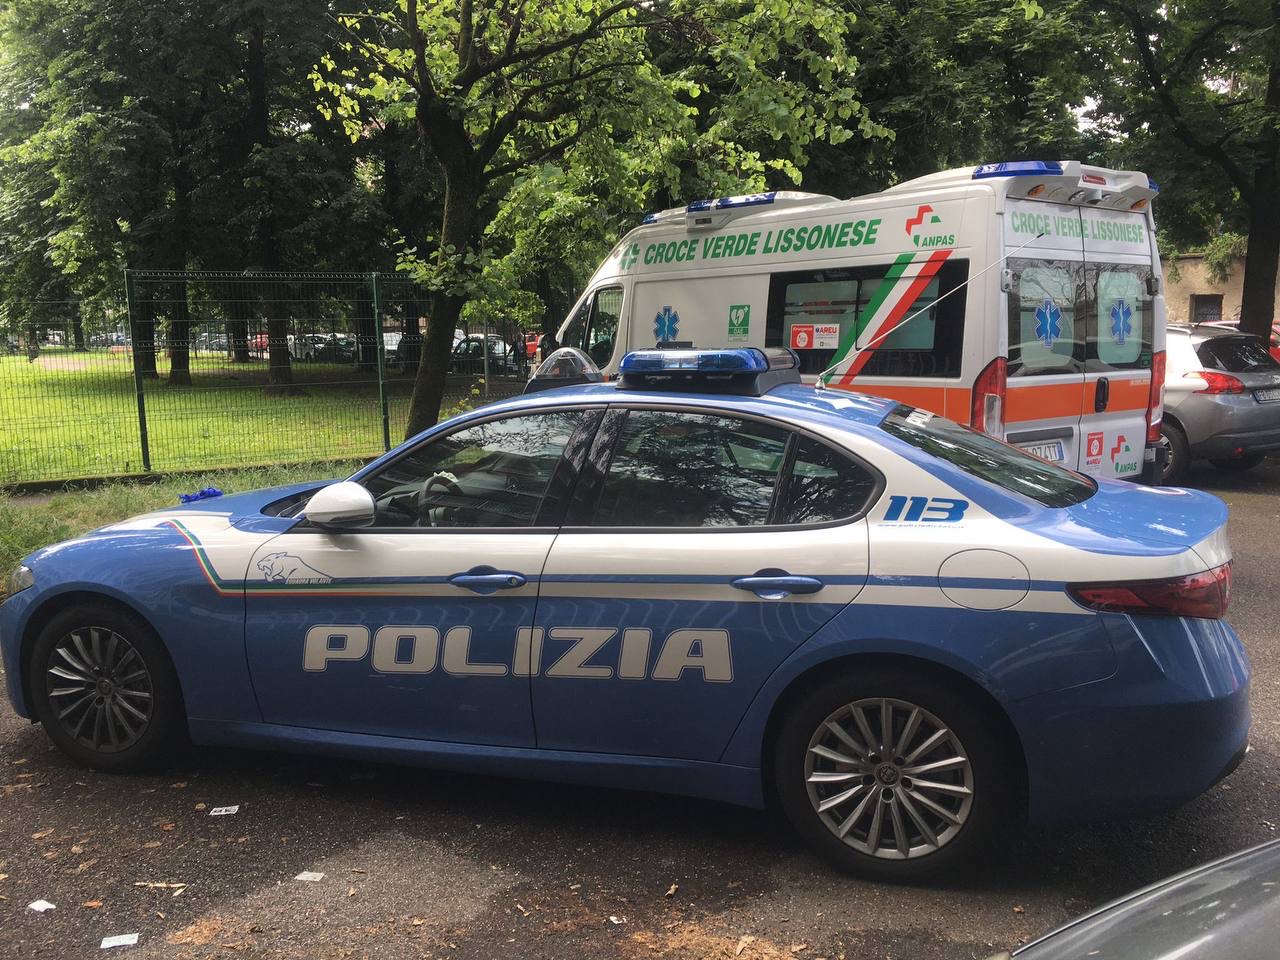 Verona, cinque poliziotti arrestati per tortura